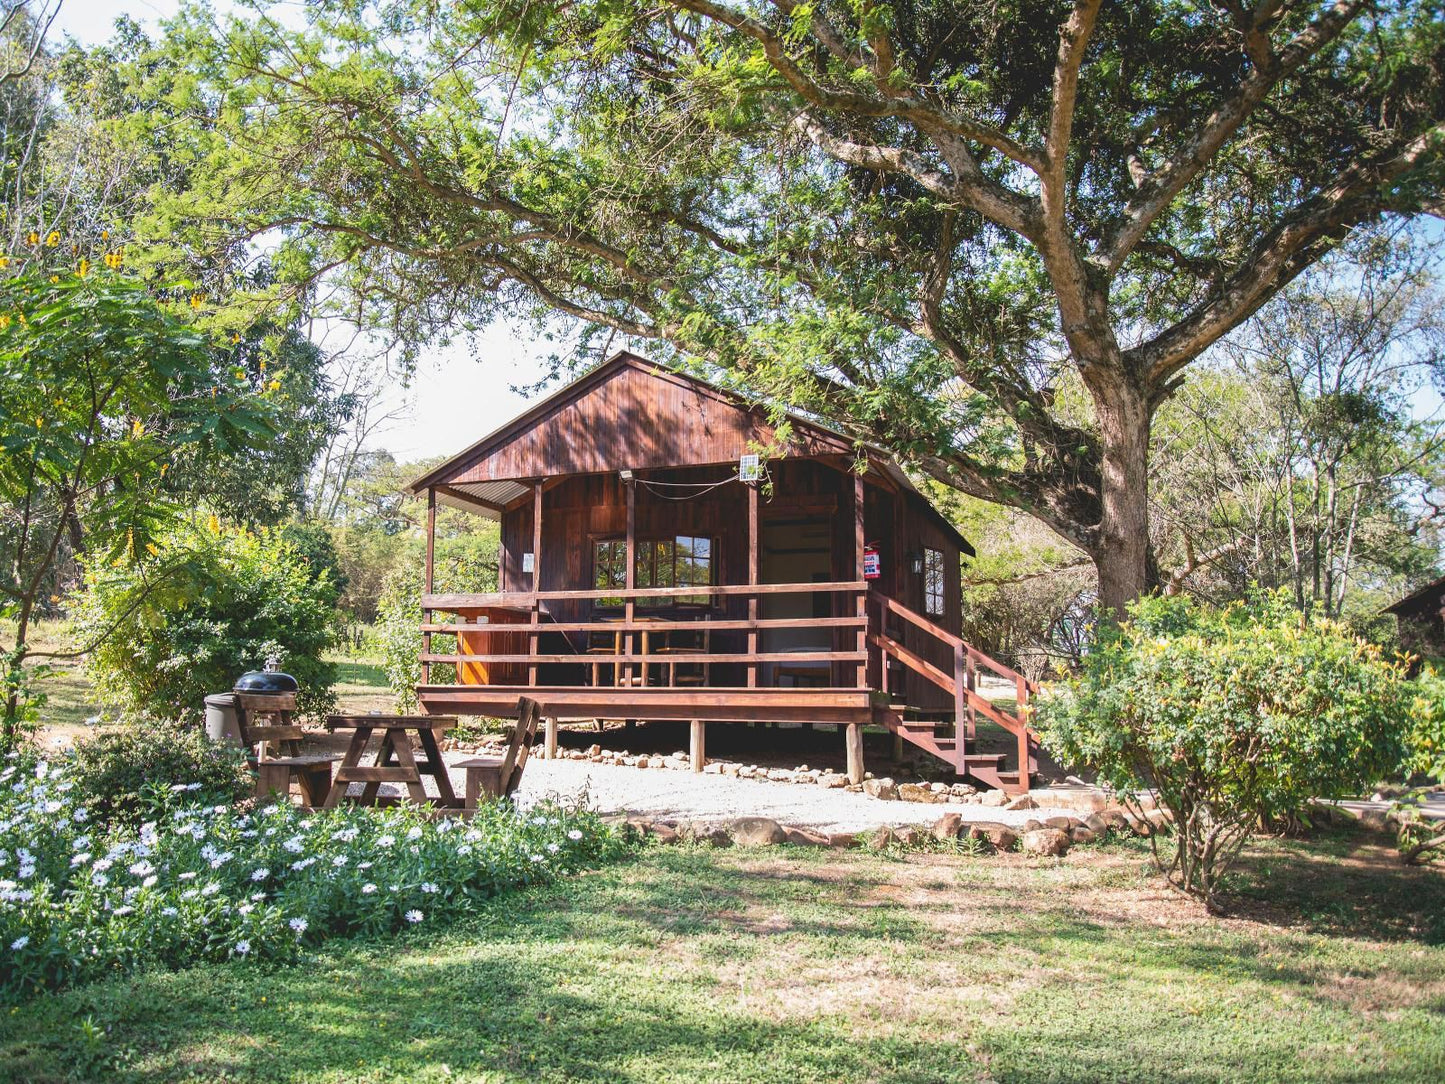 Thokozani Lodge White River Mpumalanga South Africa Cabin, Building, Architecture